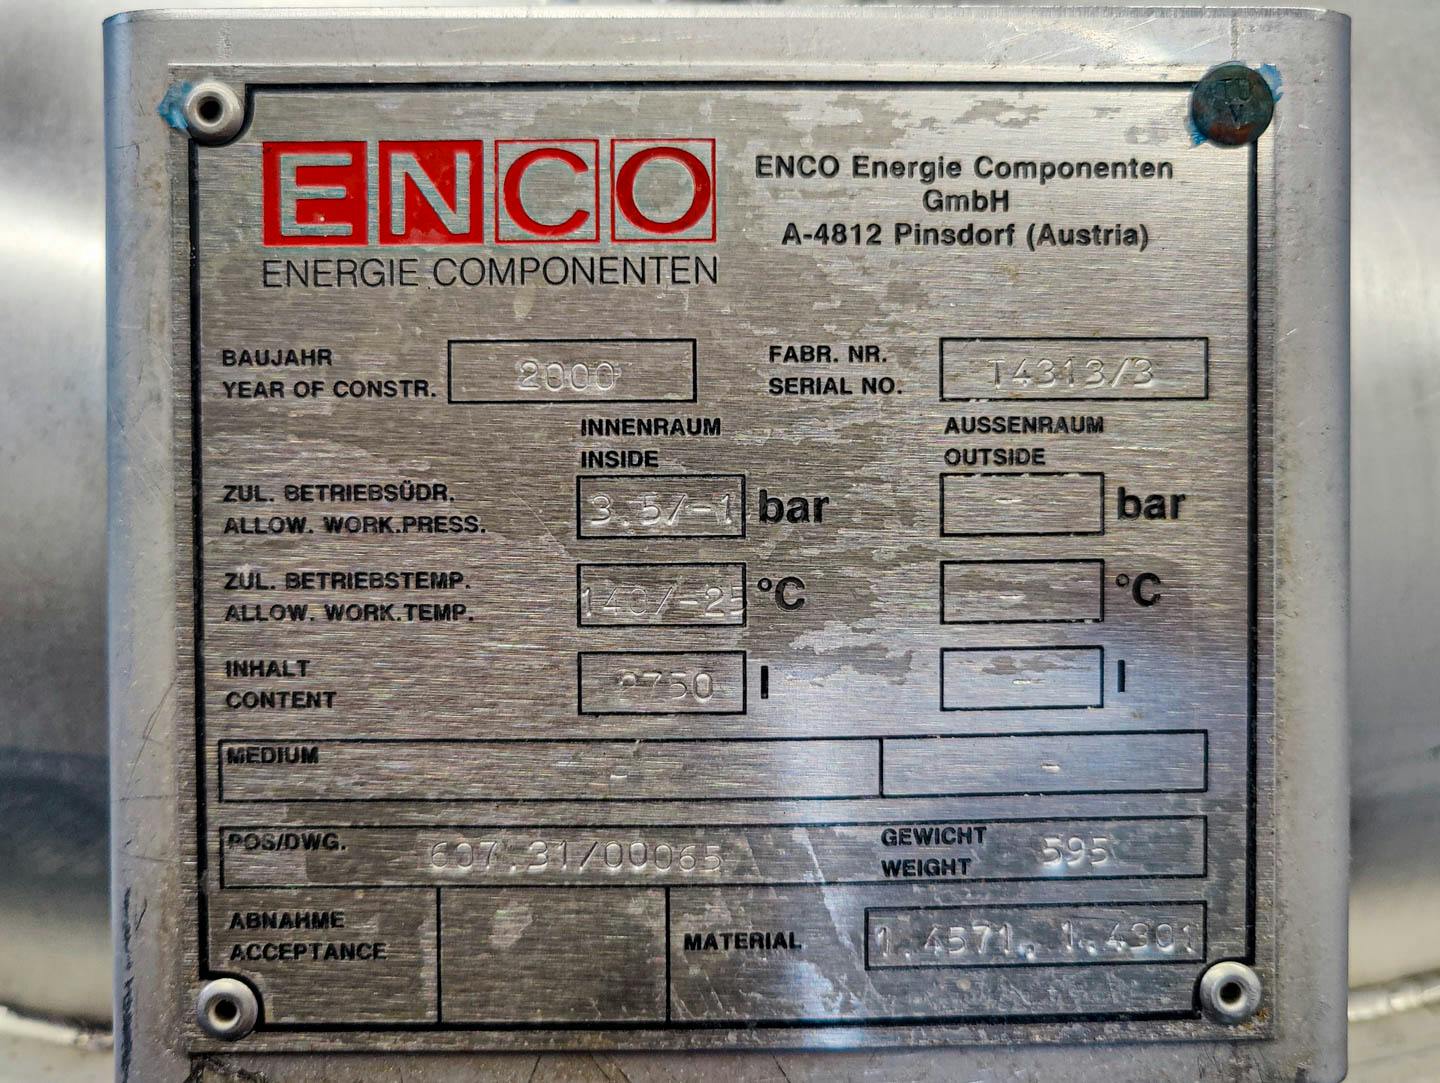 Enco - Pressure vessel - image 6